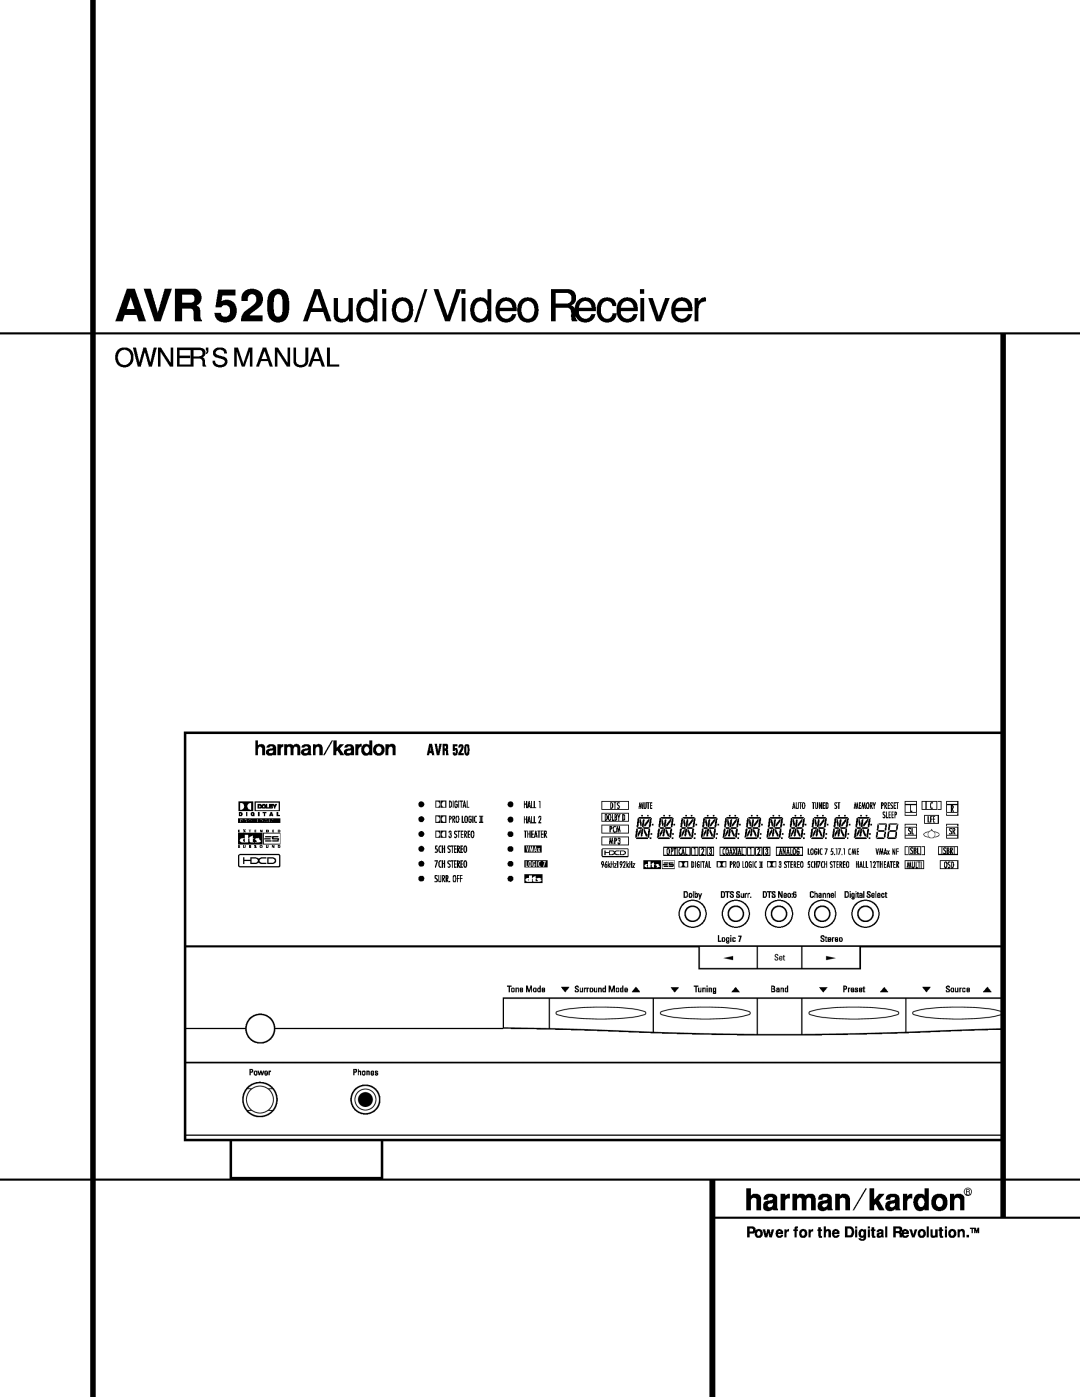 Harman-Kardon owner manual AVR 520 Audio/ Video Receiver, Power for the Digital Revolution 